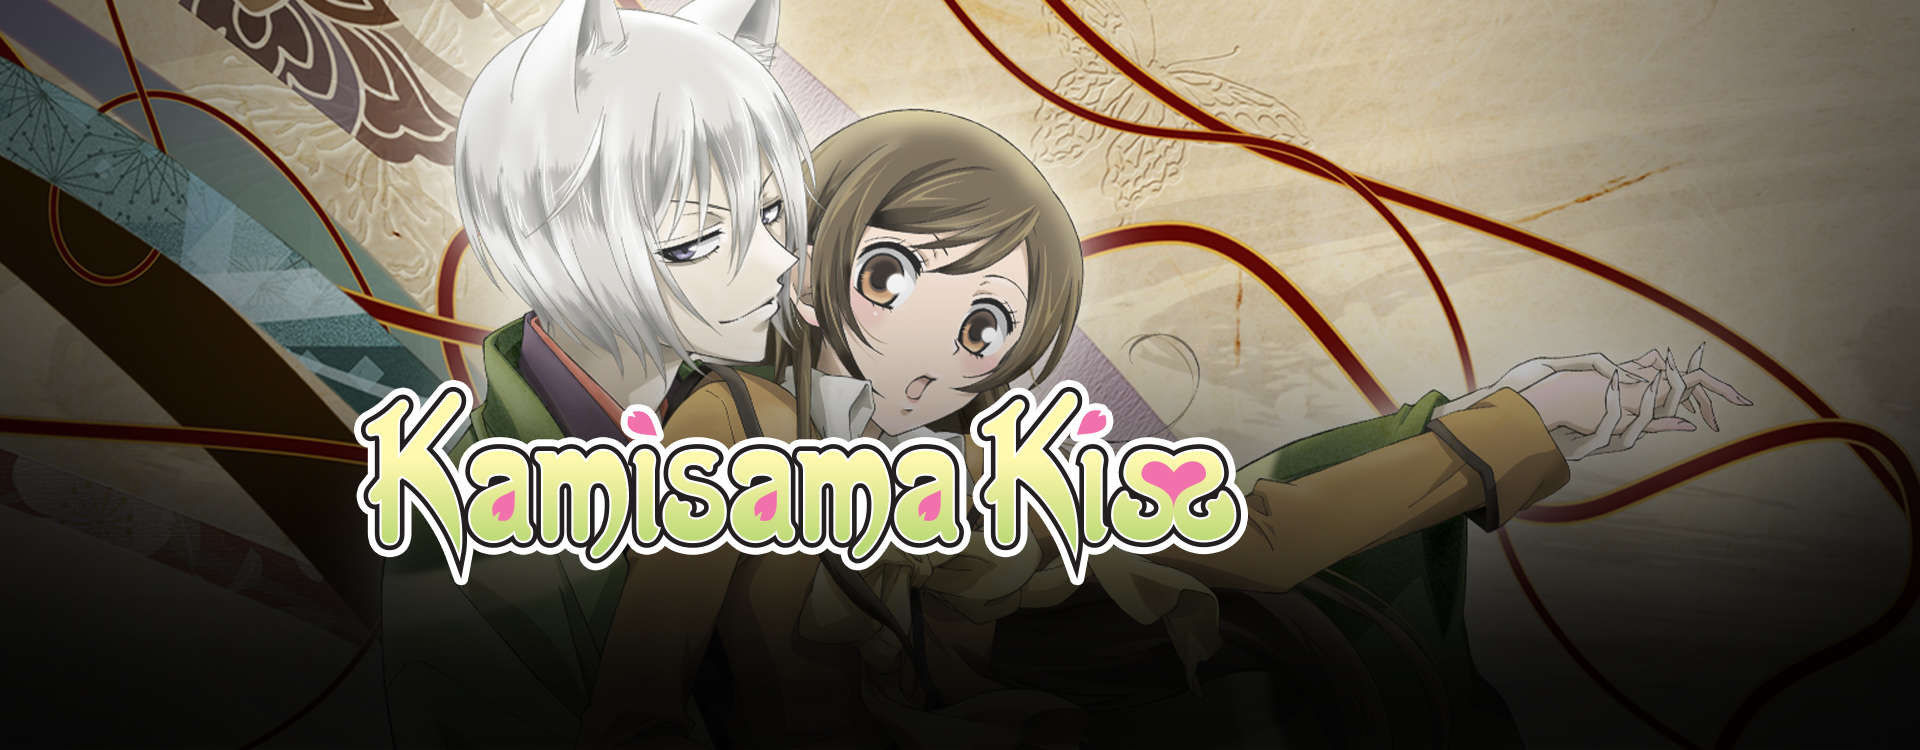 Romance Anime On Hulu For Hopeless Romantics  RomanceDevoured